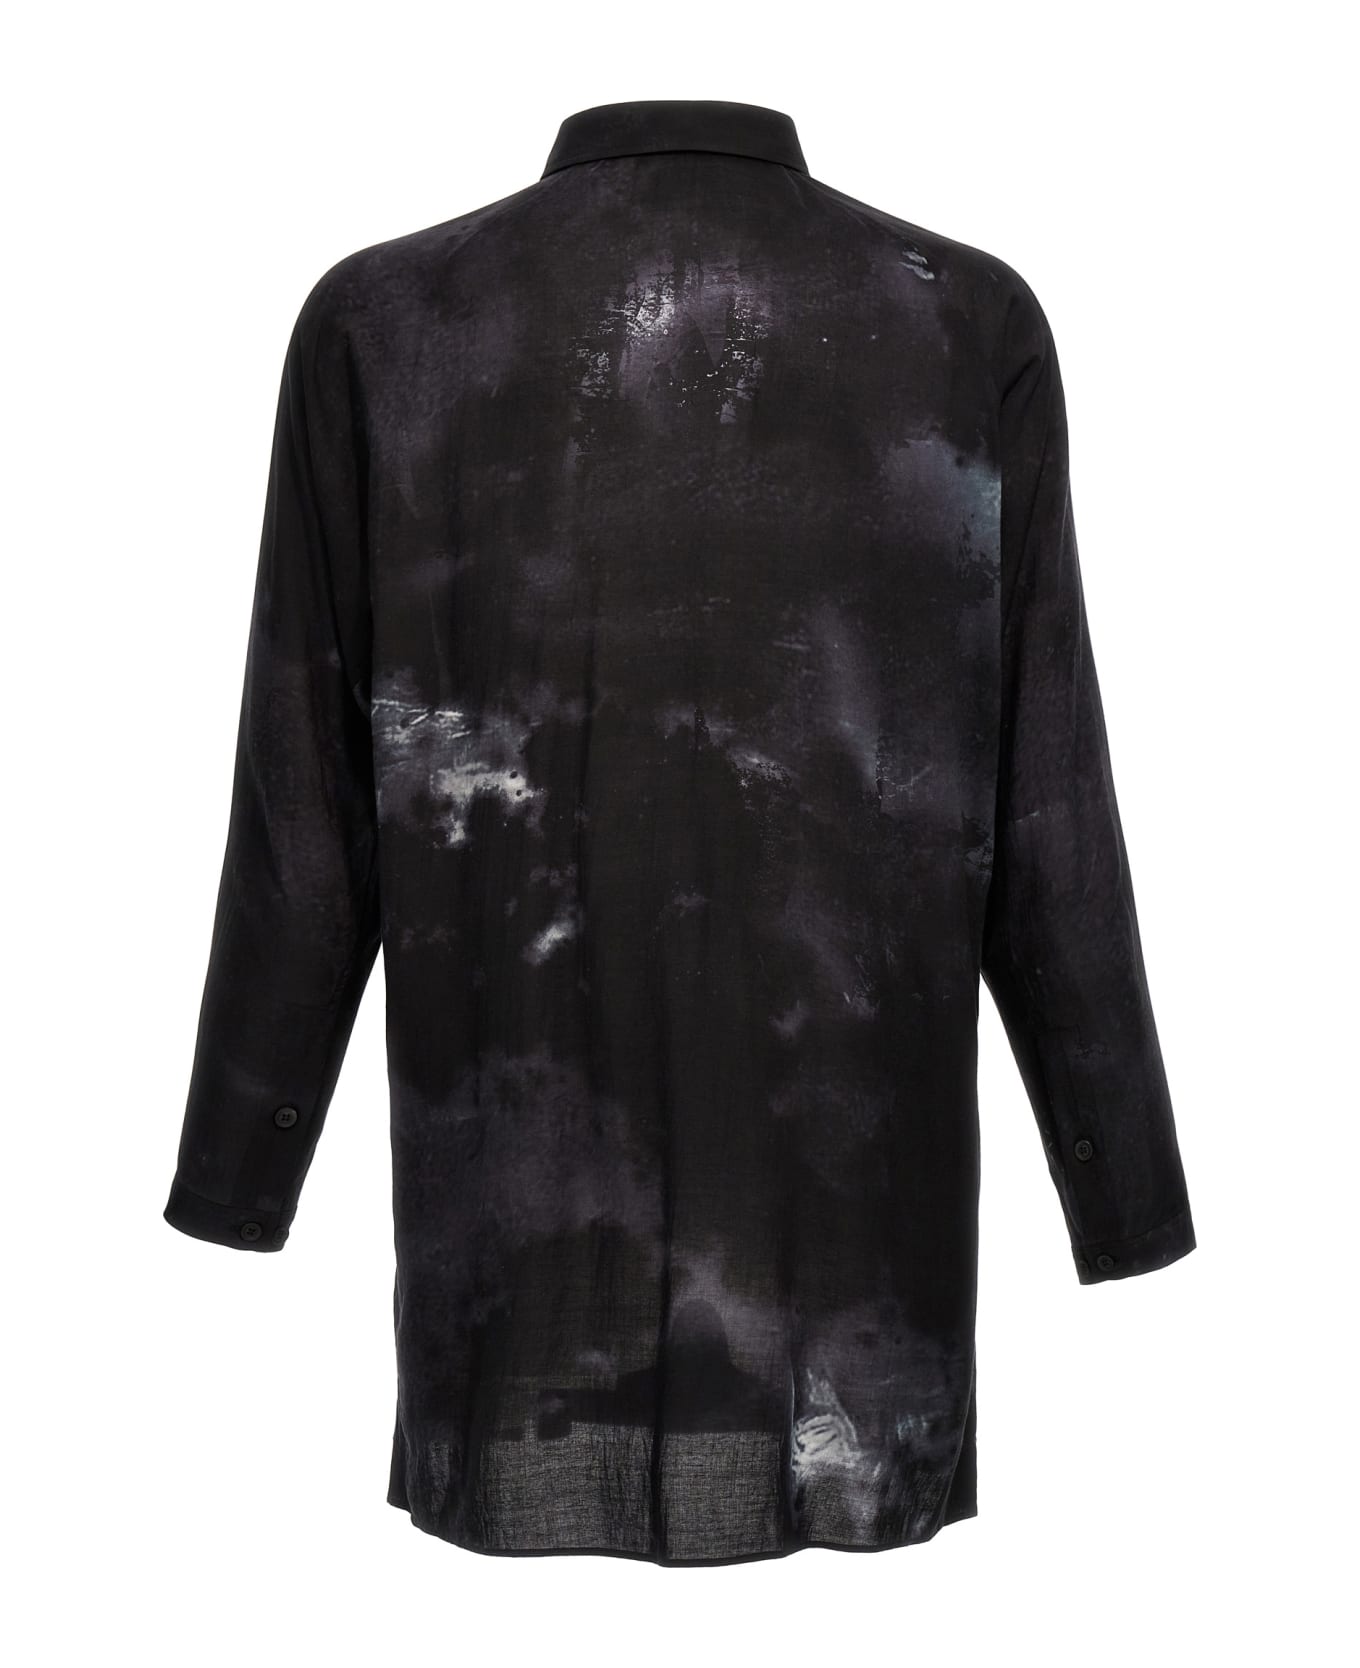 Yohji Yamamoto 'j-pt Side Gusset' Shirt - Black  